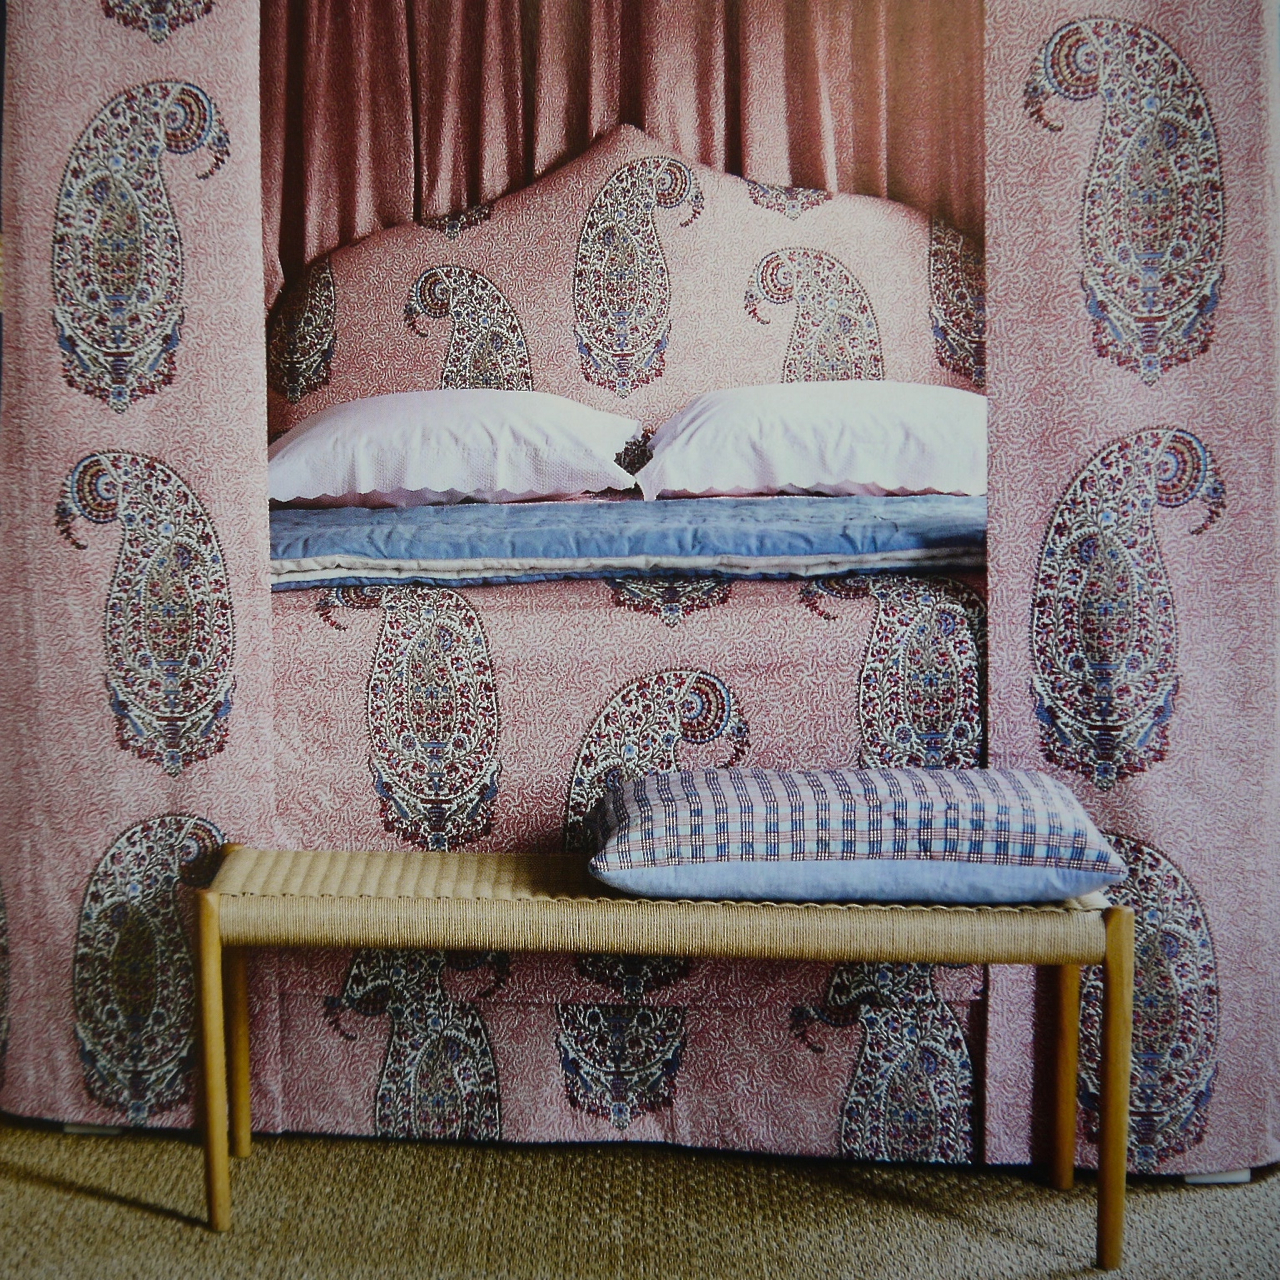 Katharine's Cushion on House & Garden November 2016 cover